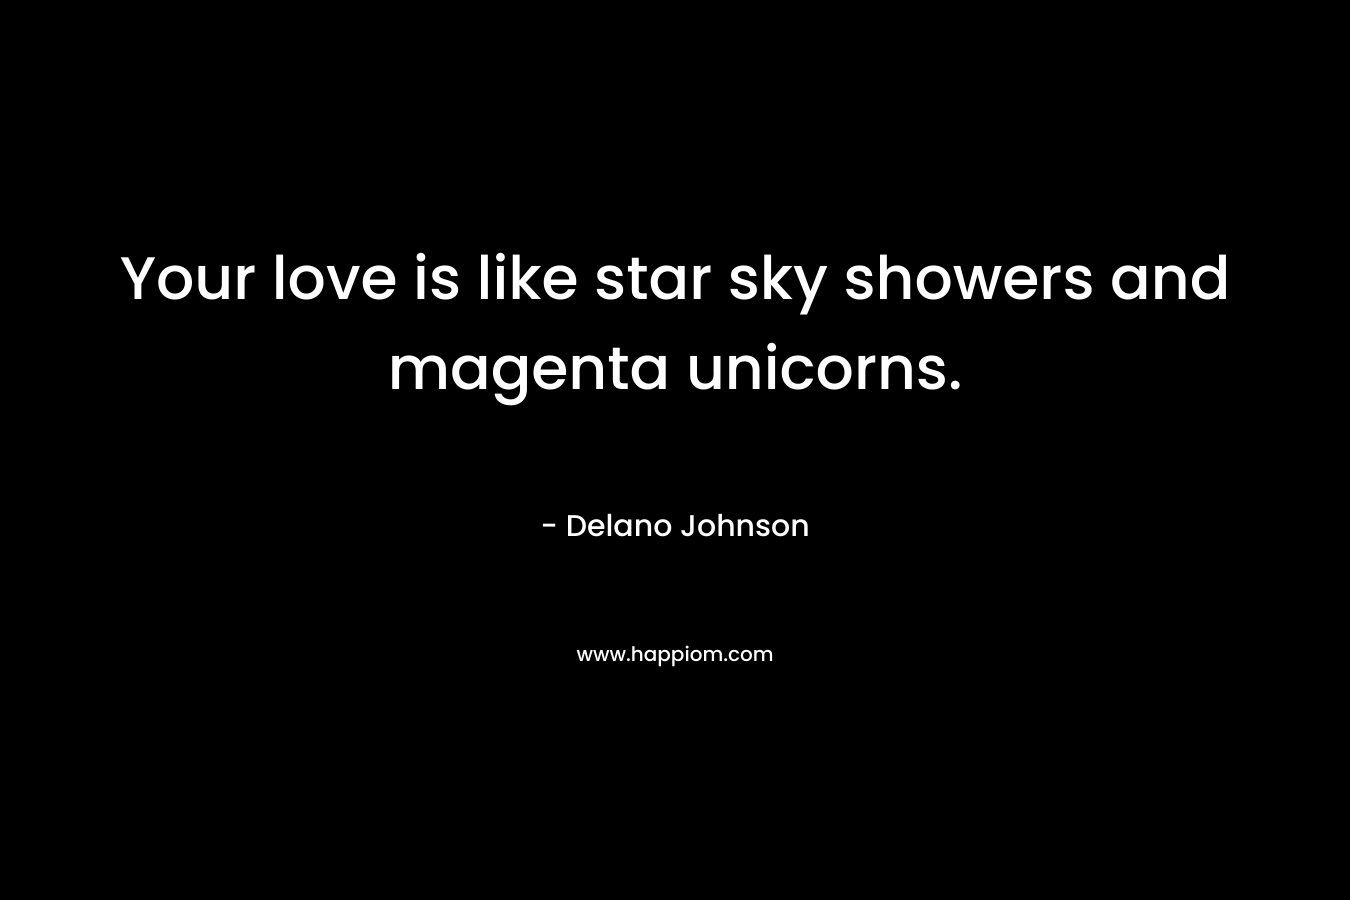 Your love is like star sky showers and magenta unicorns.